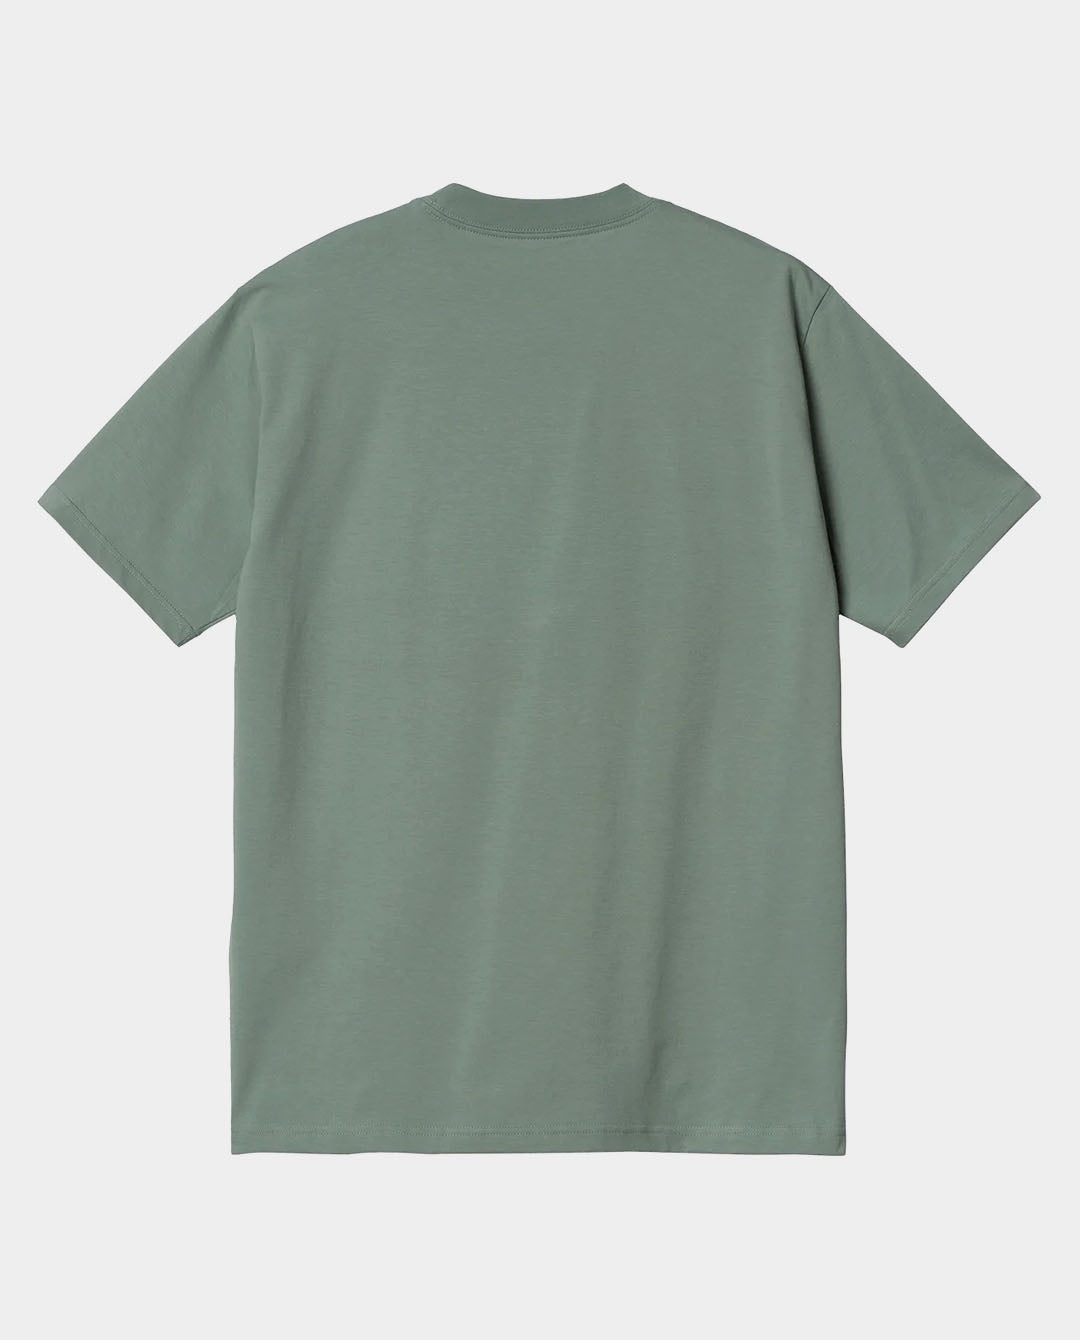 Carhartt WIP - Mystery Machine T-Shirt - Teal